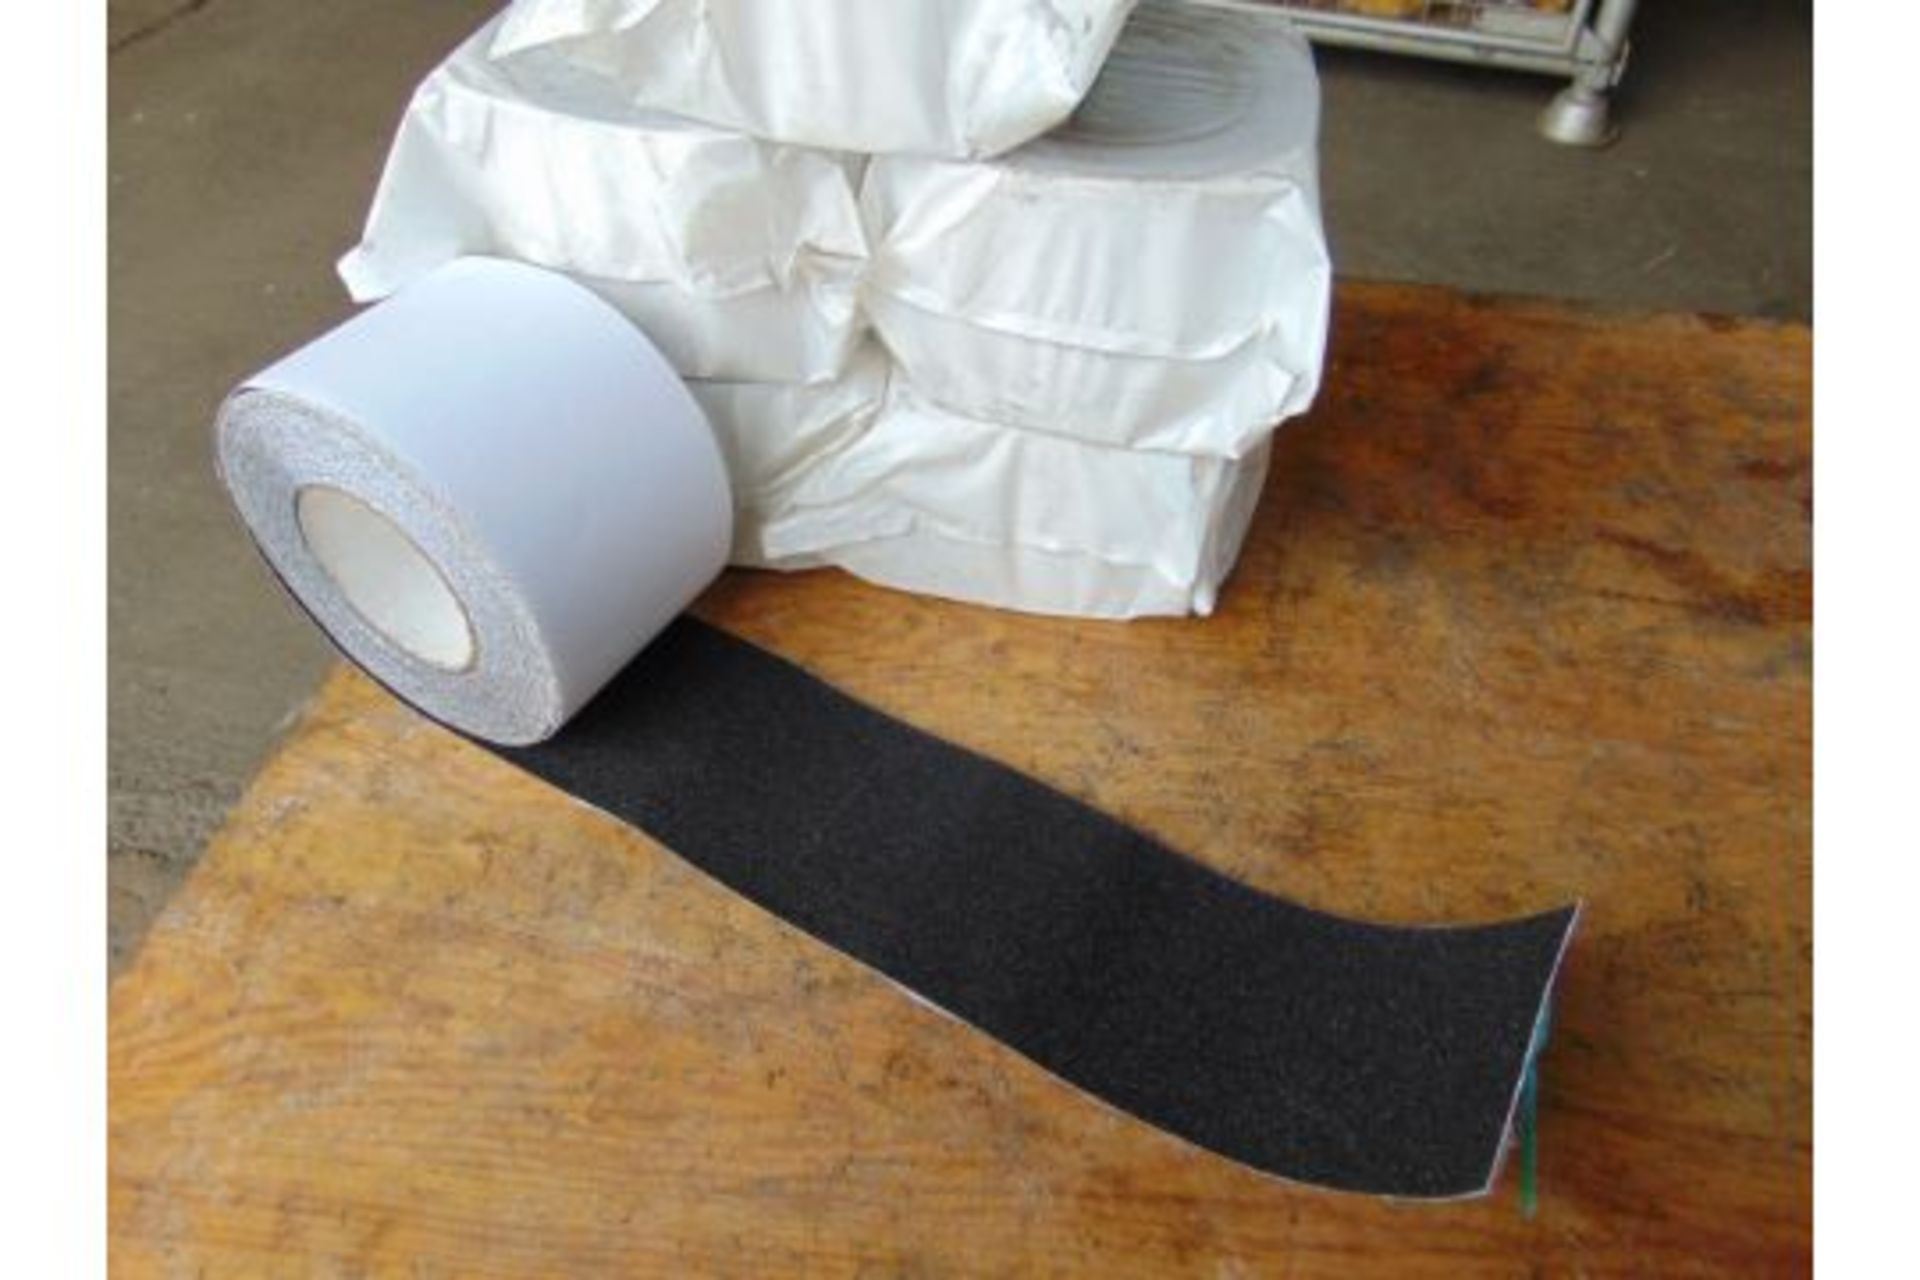 6 x New Rolls of Self Adhesive Walkway Grip Tape - Unopened in Original Packaging.MOD Stock - Image 2 of 3